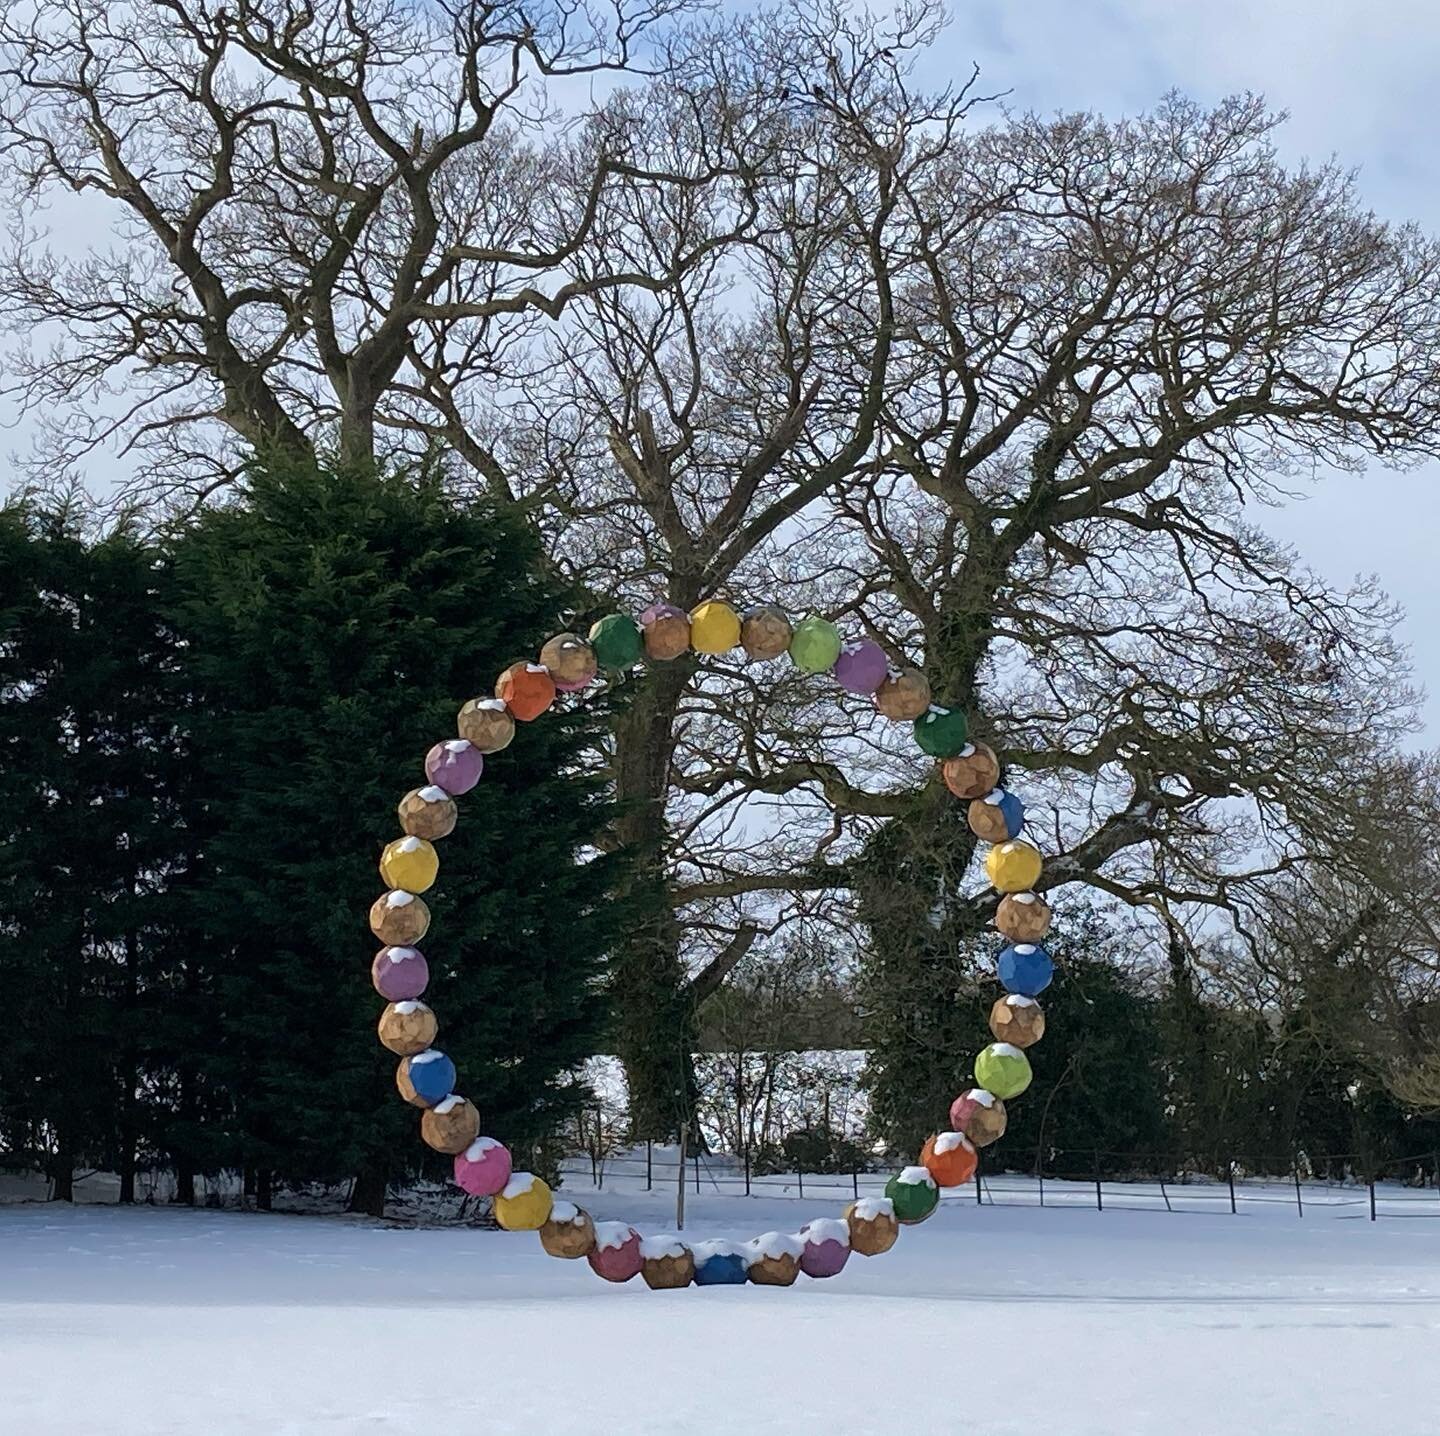 Garland Necklace 
.
.
.
.
#colour #wood #sculpture #snow #norfolk #beastfromtheeast